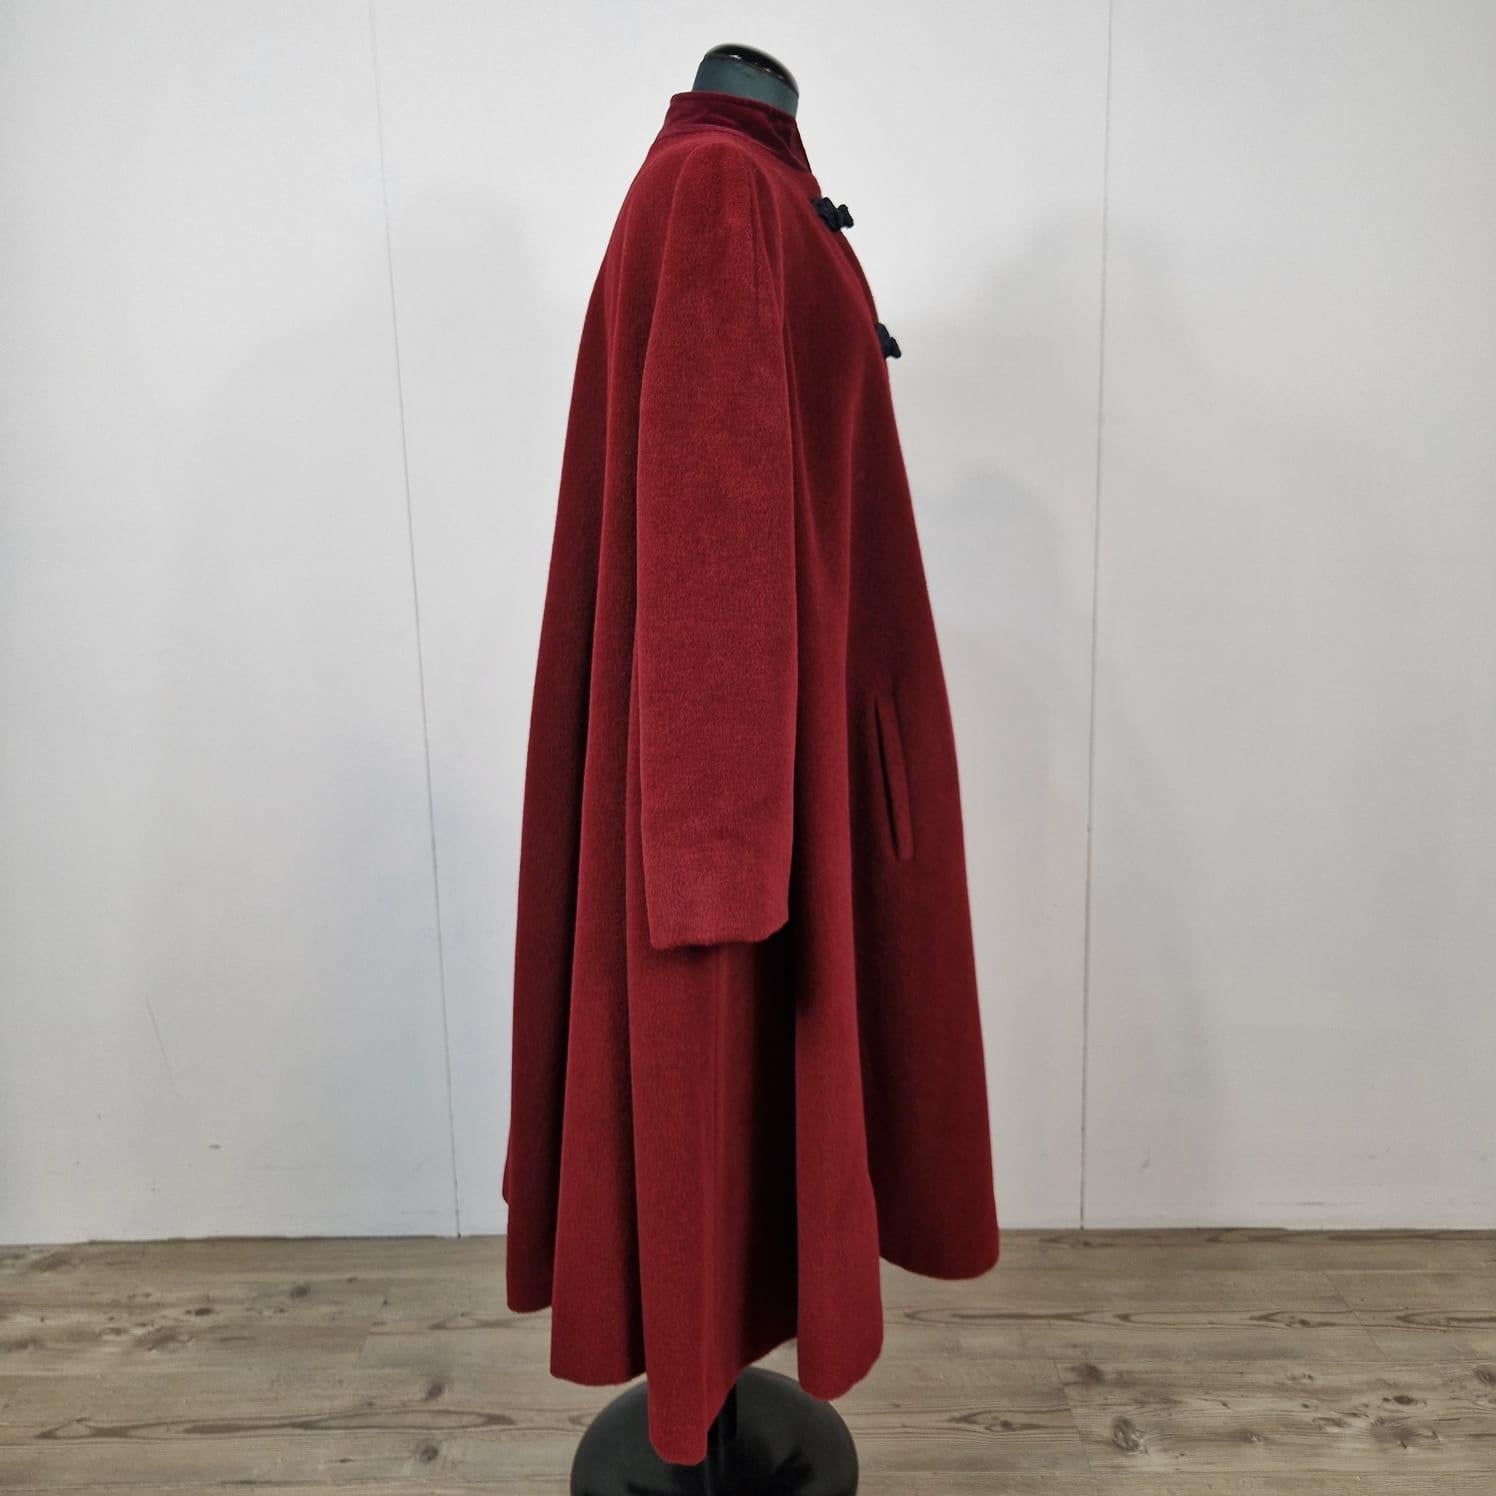 Valentino coat in burgundy wool. 2